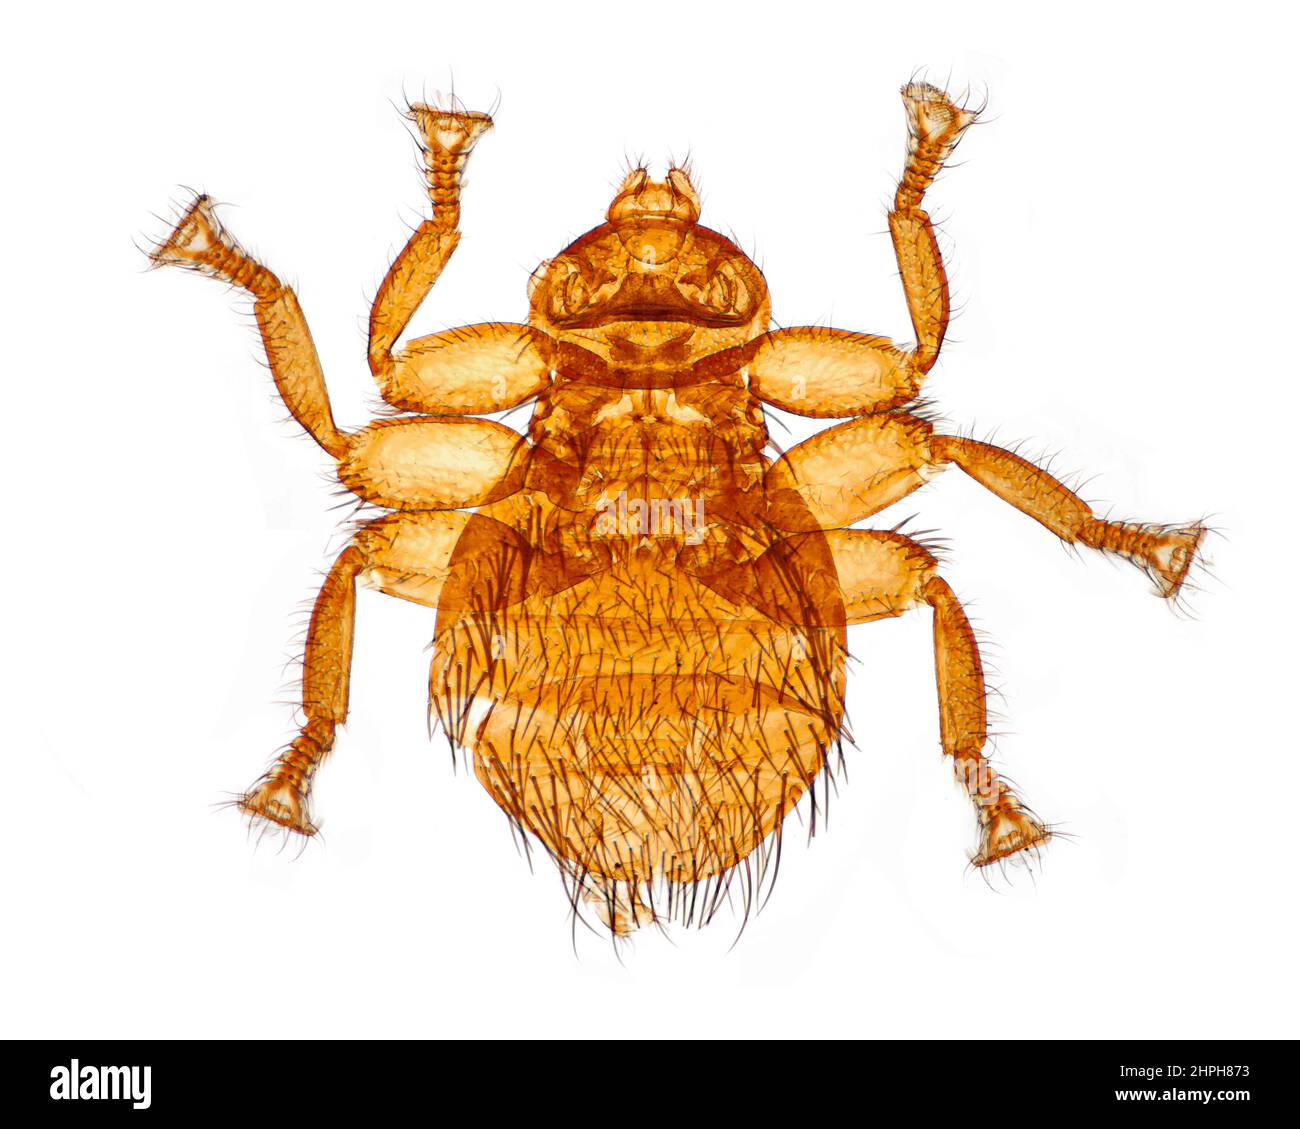 Braula fly louse, brightfield photomicrograph Stock Photo